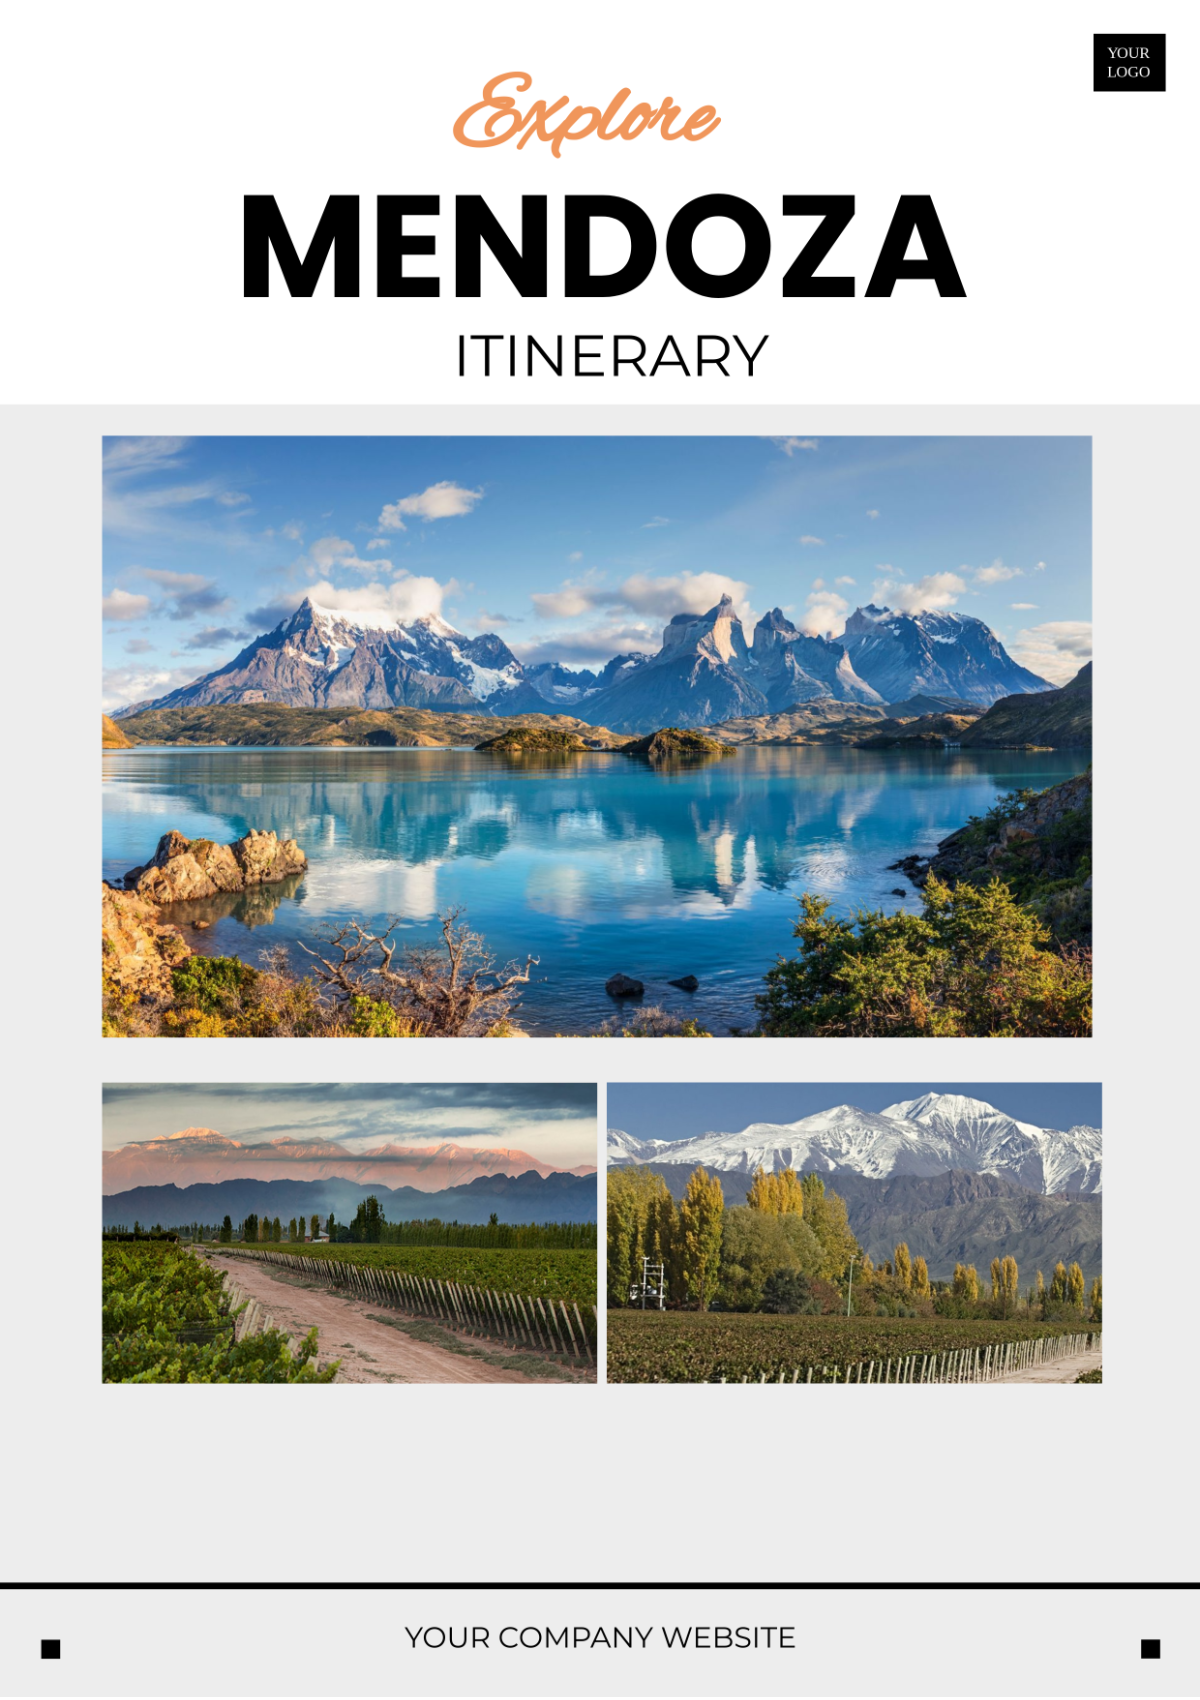 Mendoza Itinerary Template